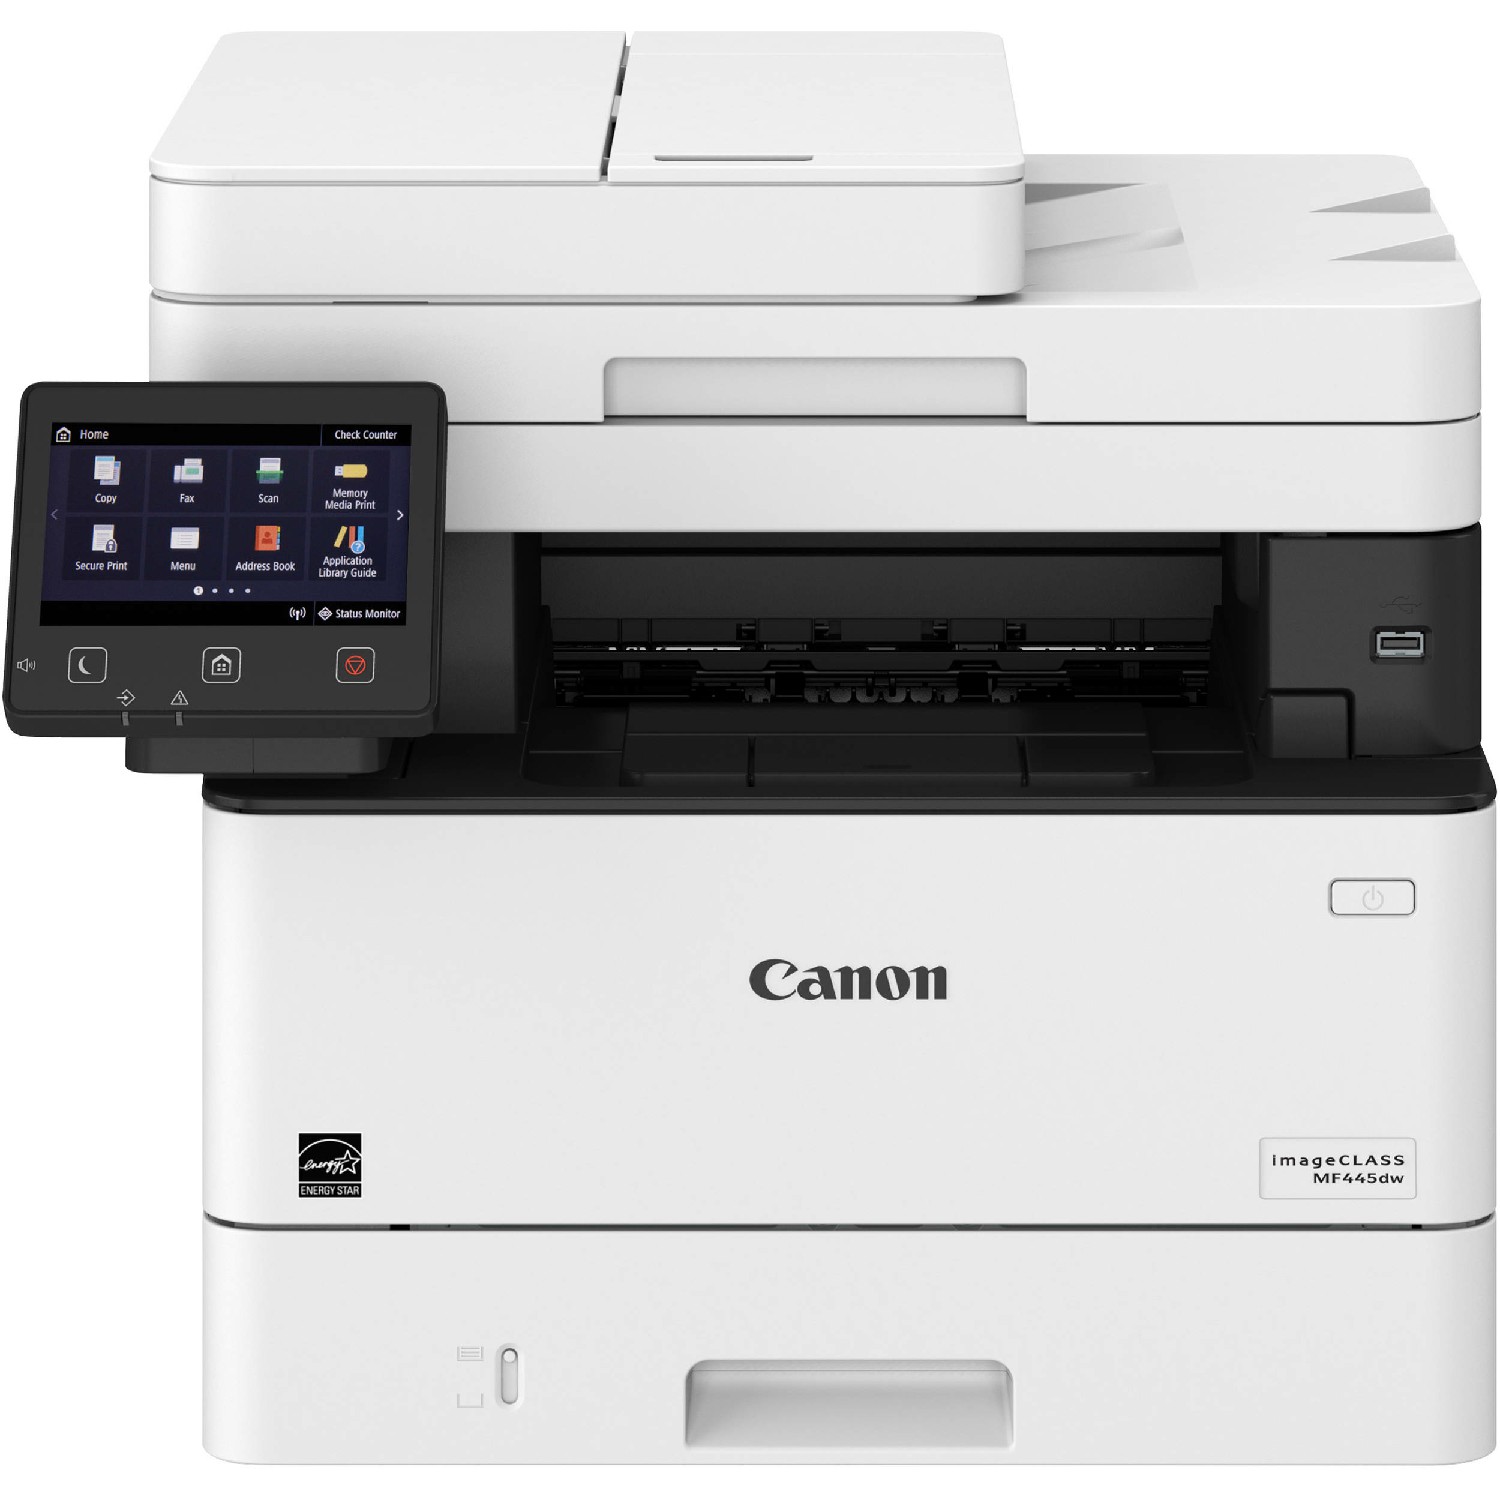 Canon imageCLASS MF445dw Monochrome Laser Printer (3514C007AA)